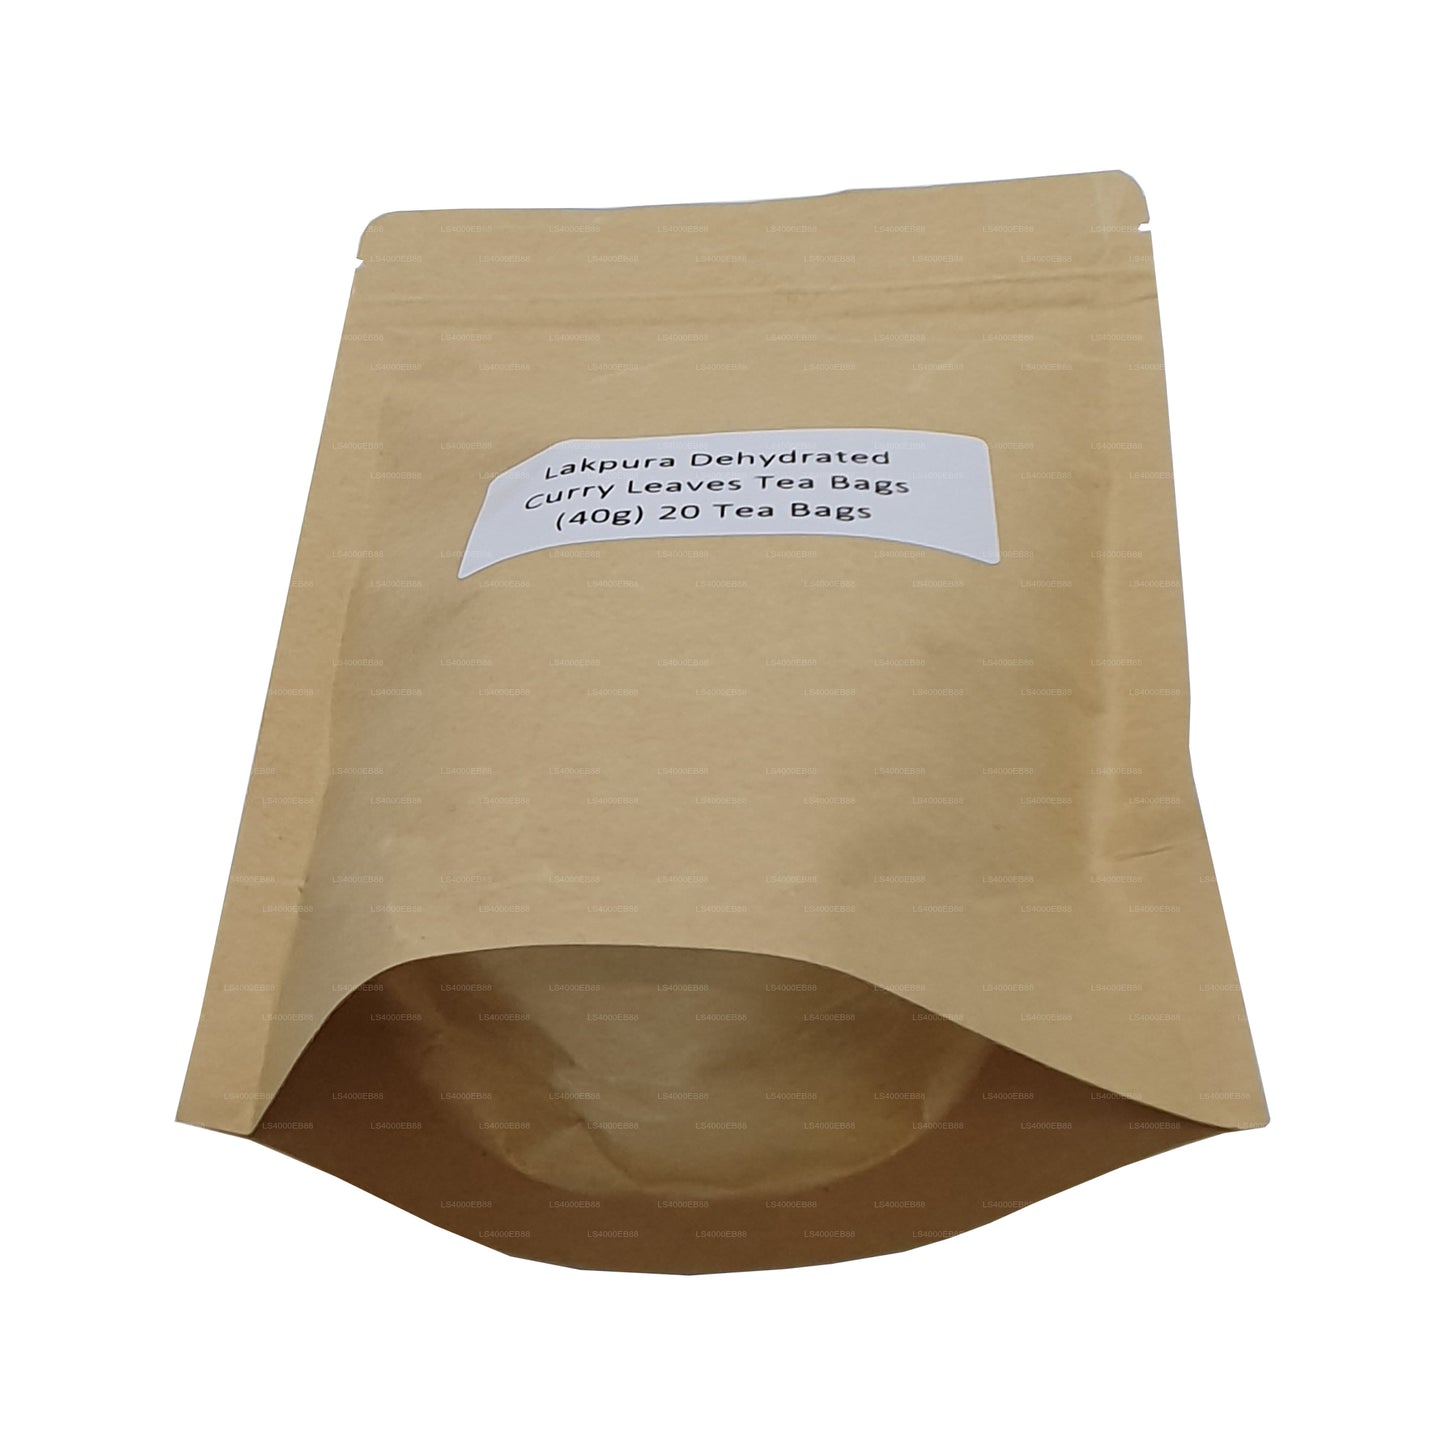 Lakpura Dehydrated Curry Leaves Tea Bags (40g) 20 Tea Bags